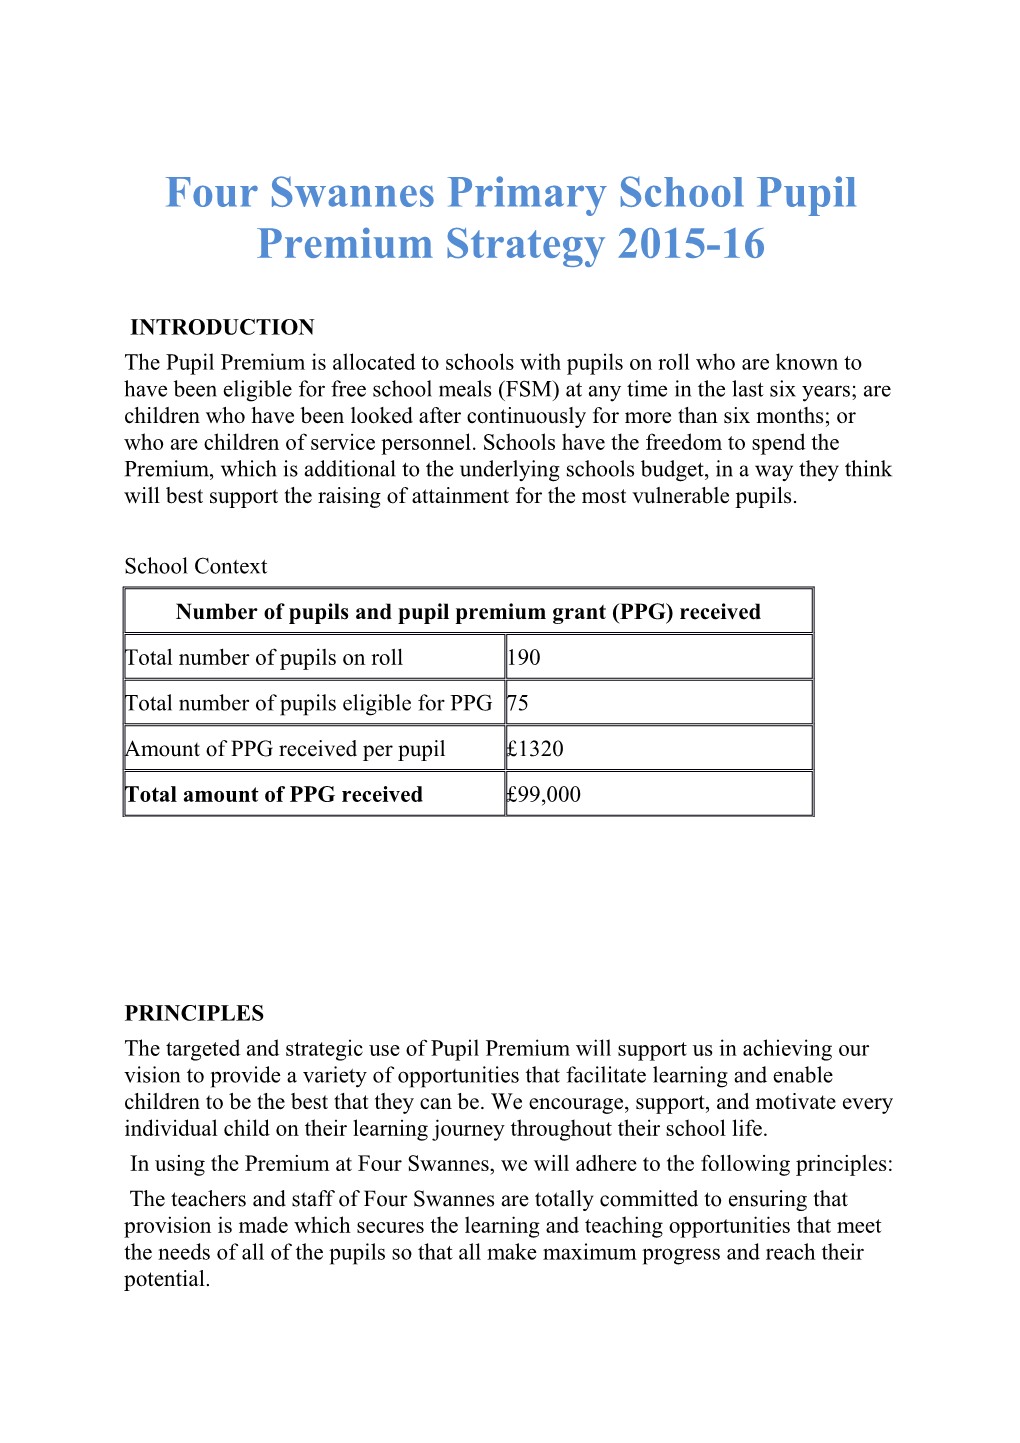 Four Swannes Primary School Pupil Premium Strategy 2015-16